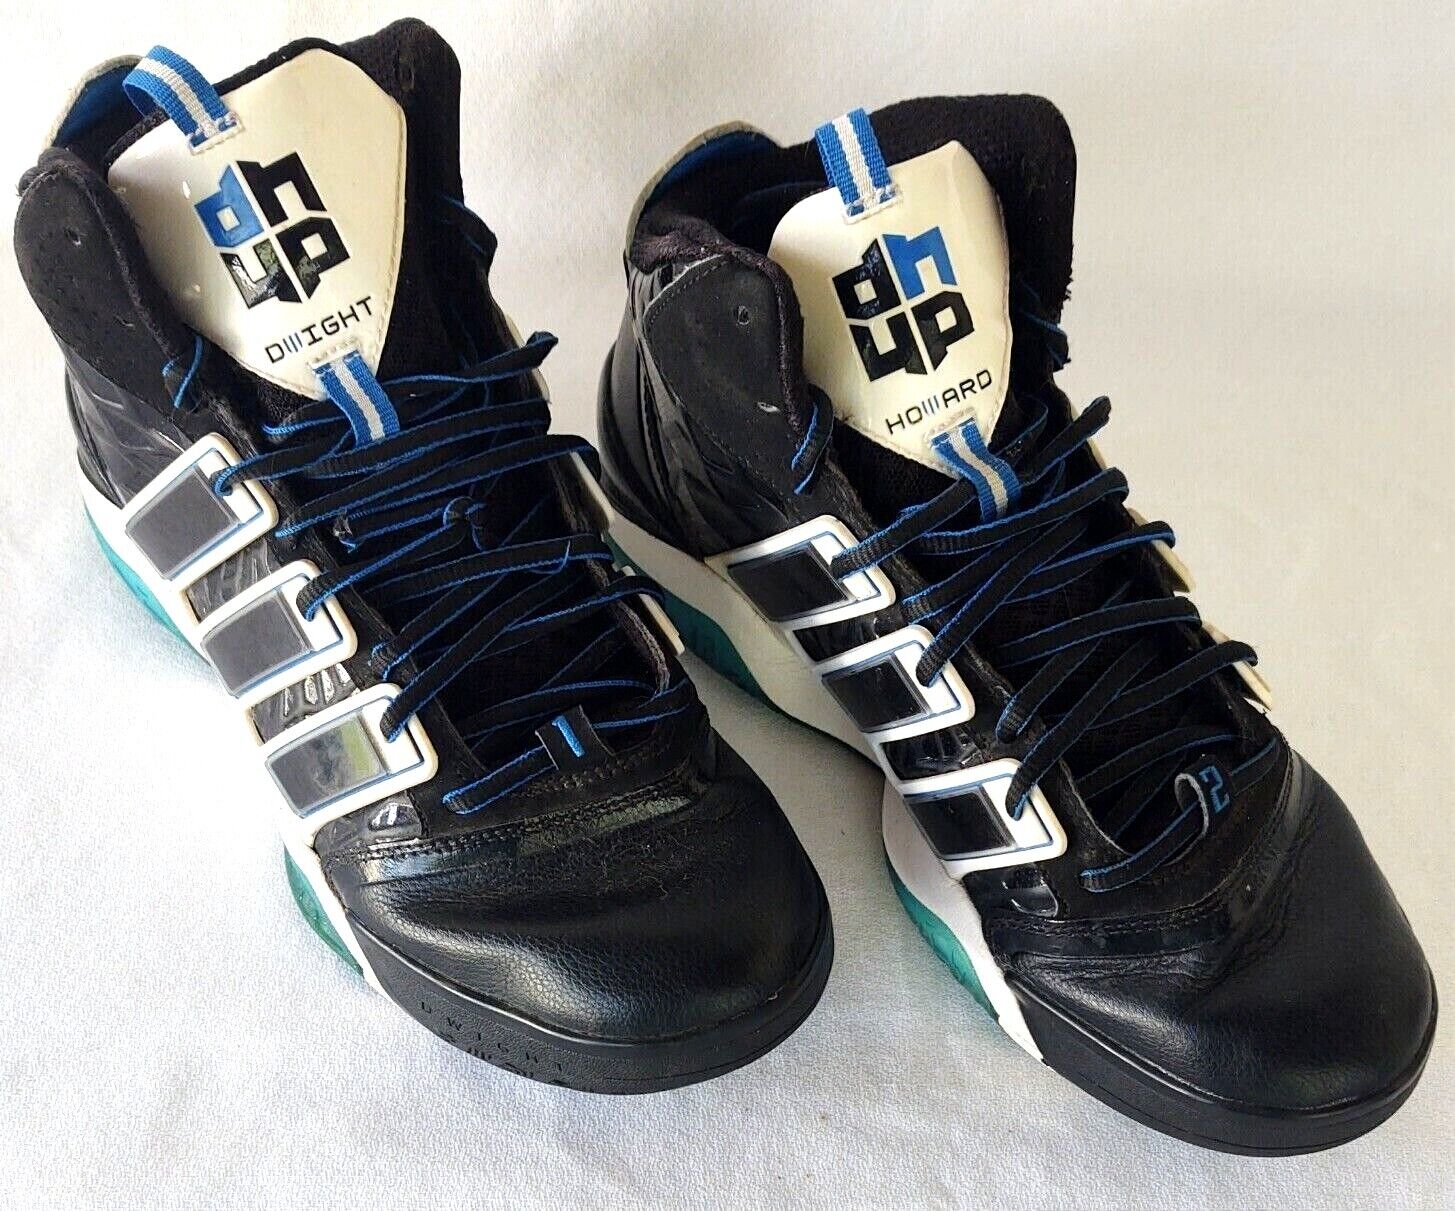 Dwight Howard Adidas Shoes Basketball Sneakers Men Size 9 | eBay